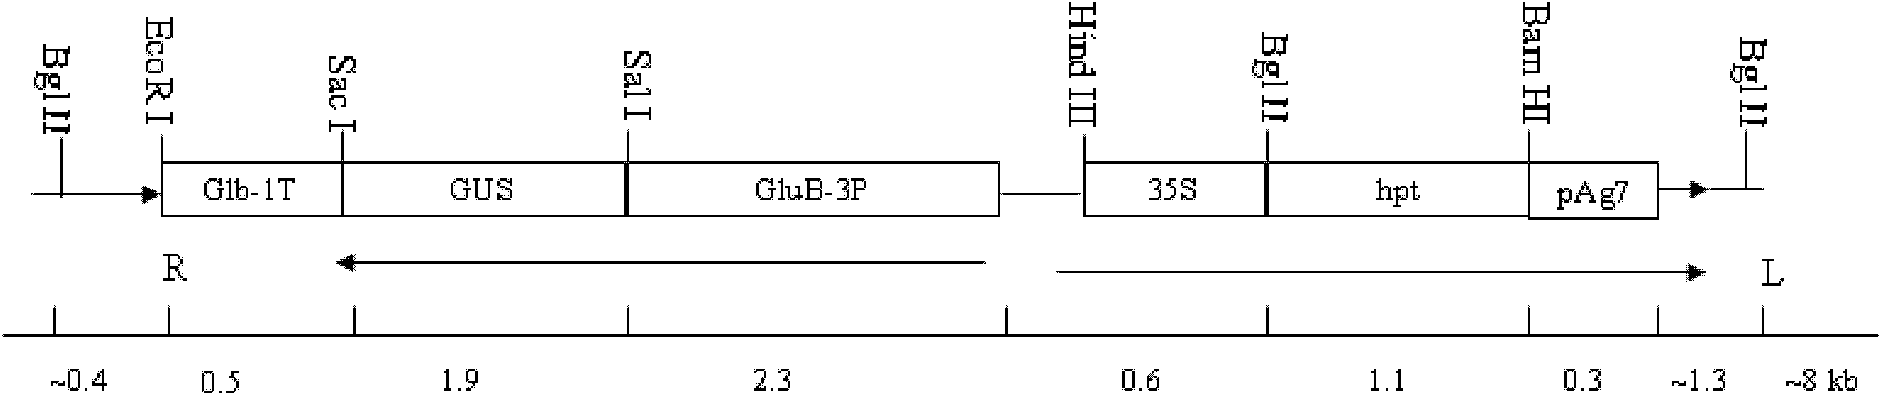 Rice seed 26kD globulin Glb-1 gene terminator and application thereof